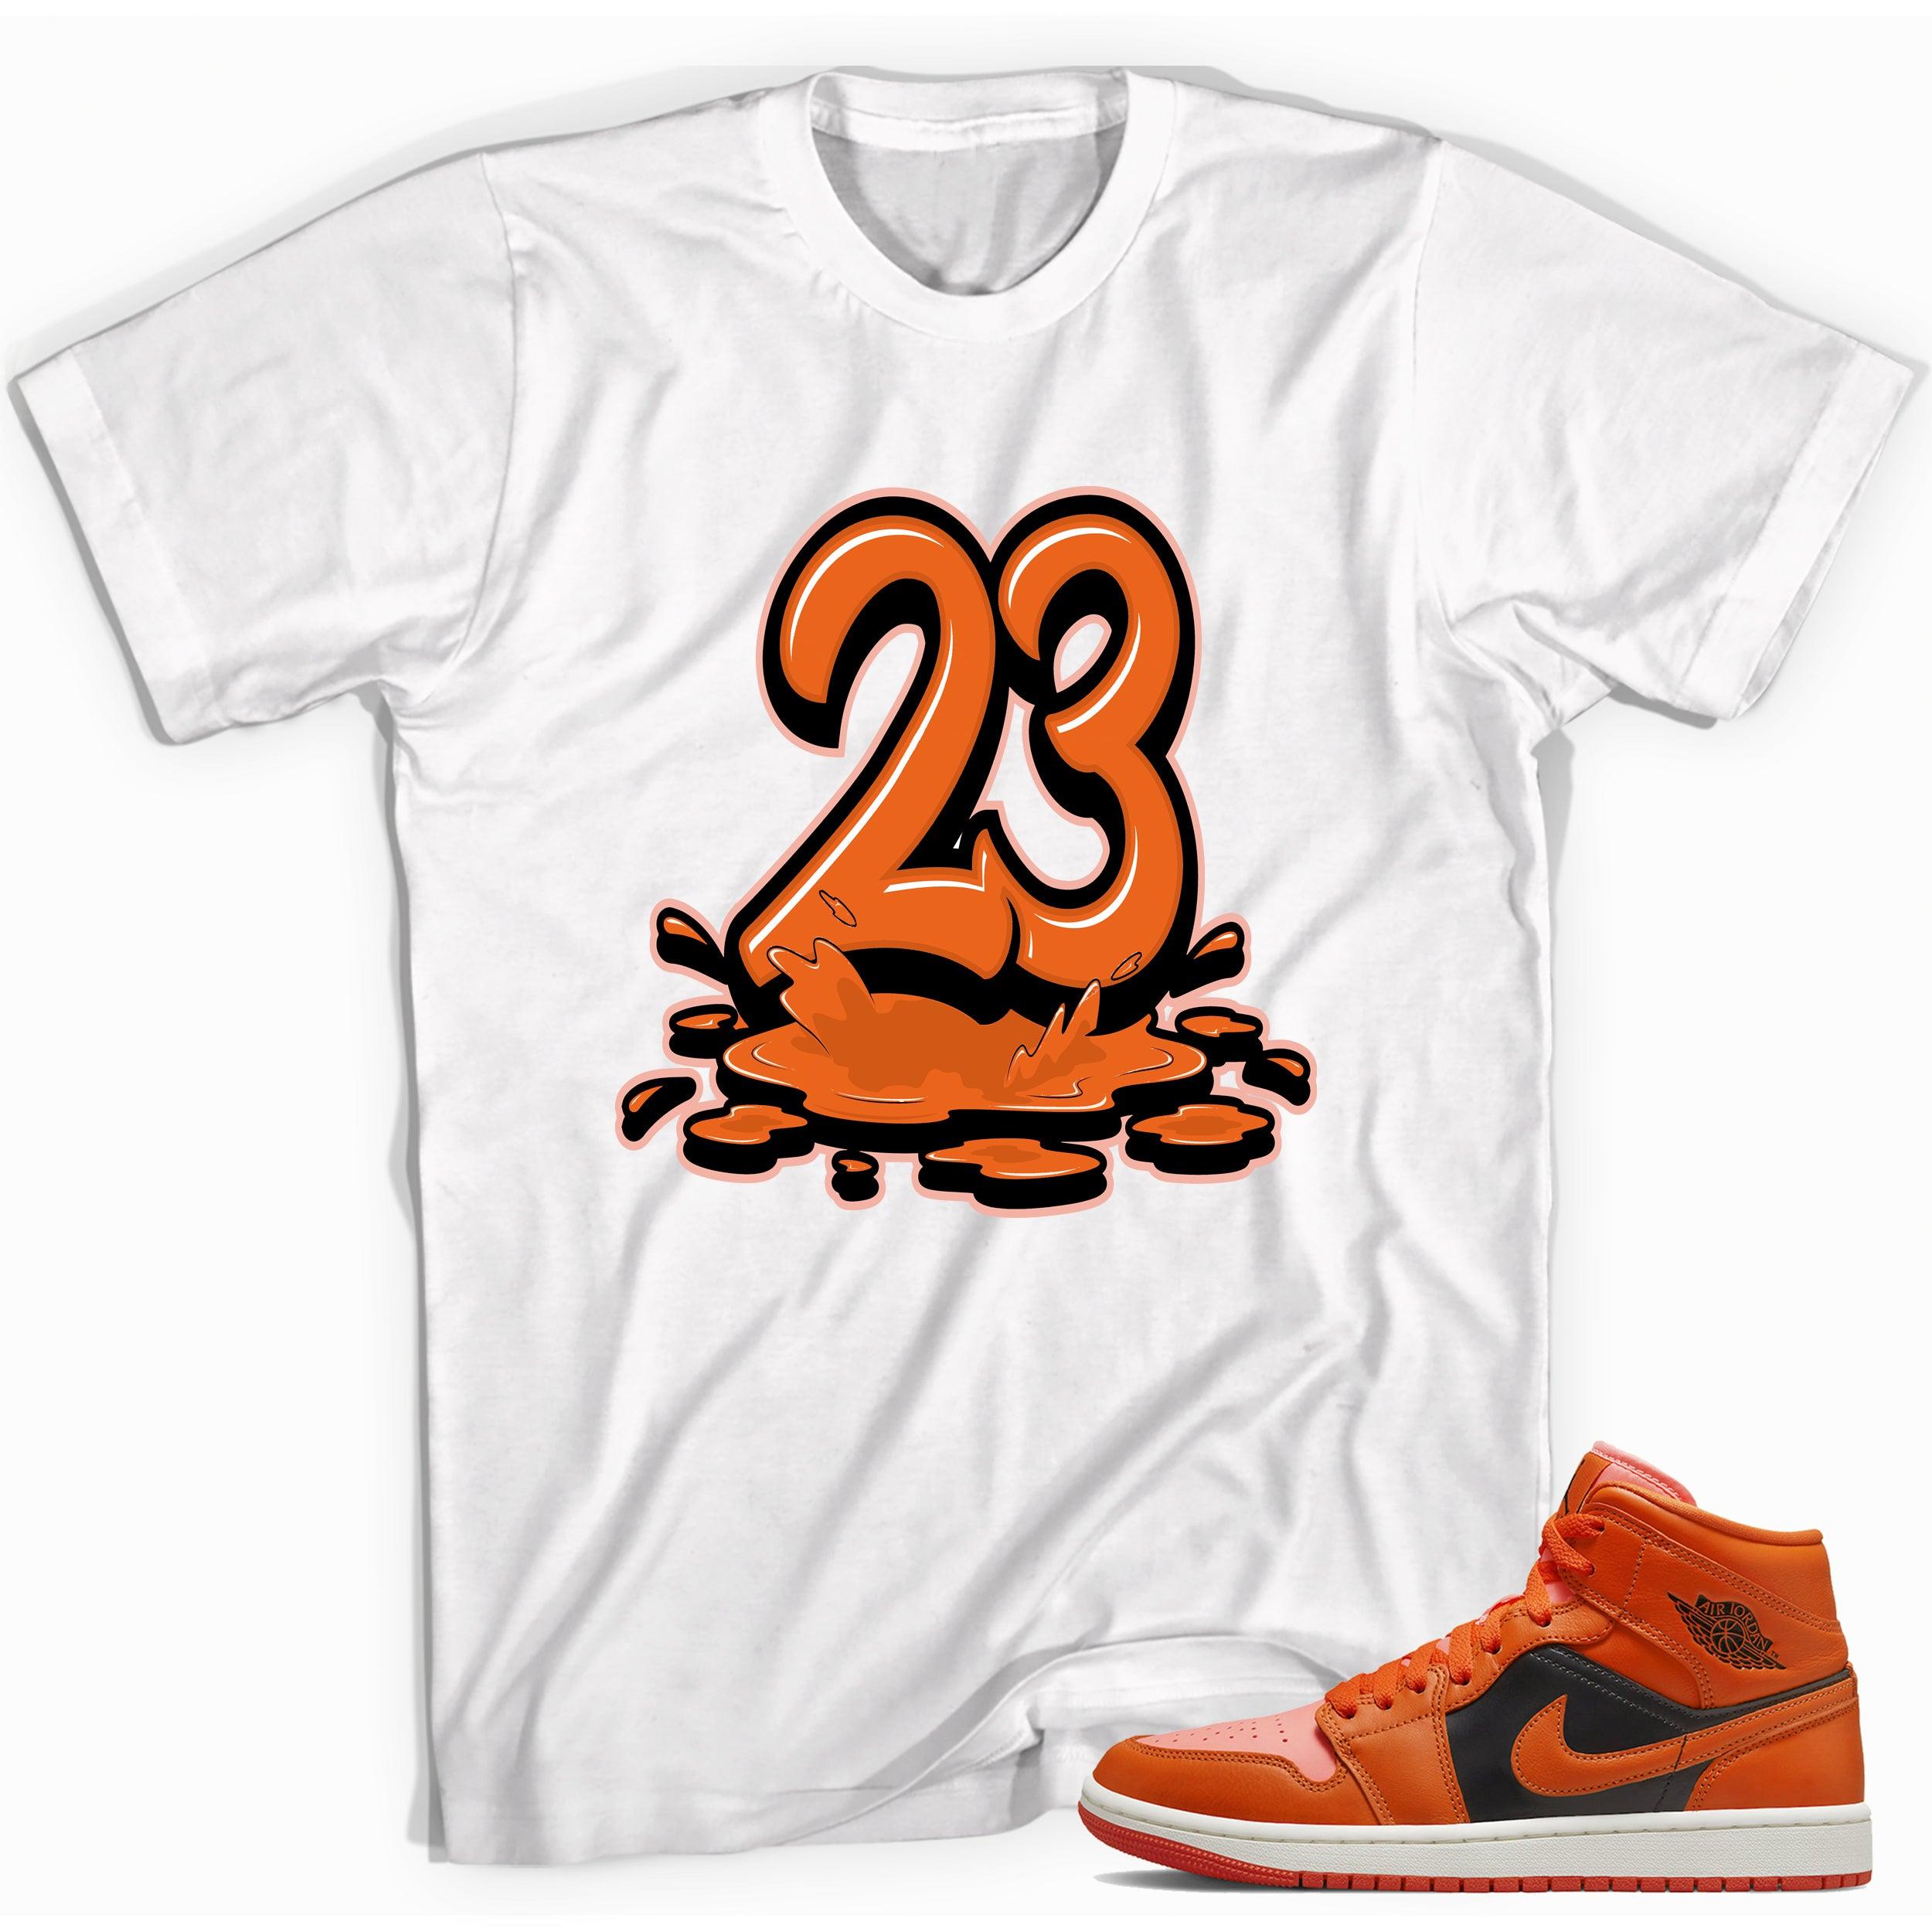 Number 23 Melting Shirt AJ 1 Mid Orange Black photo